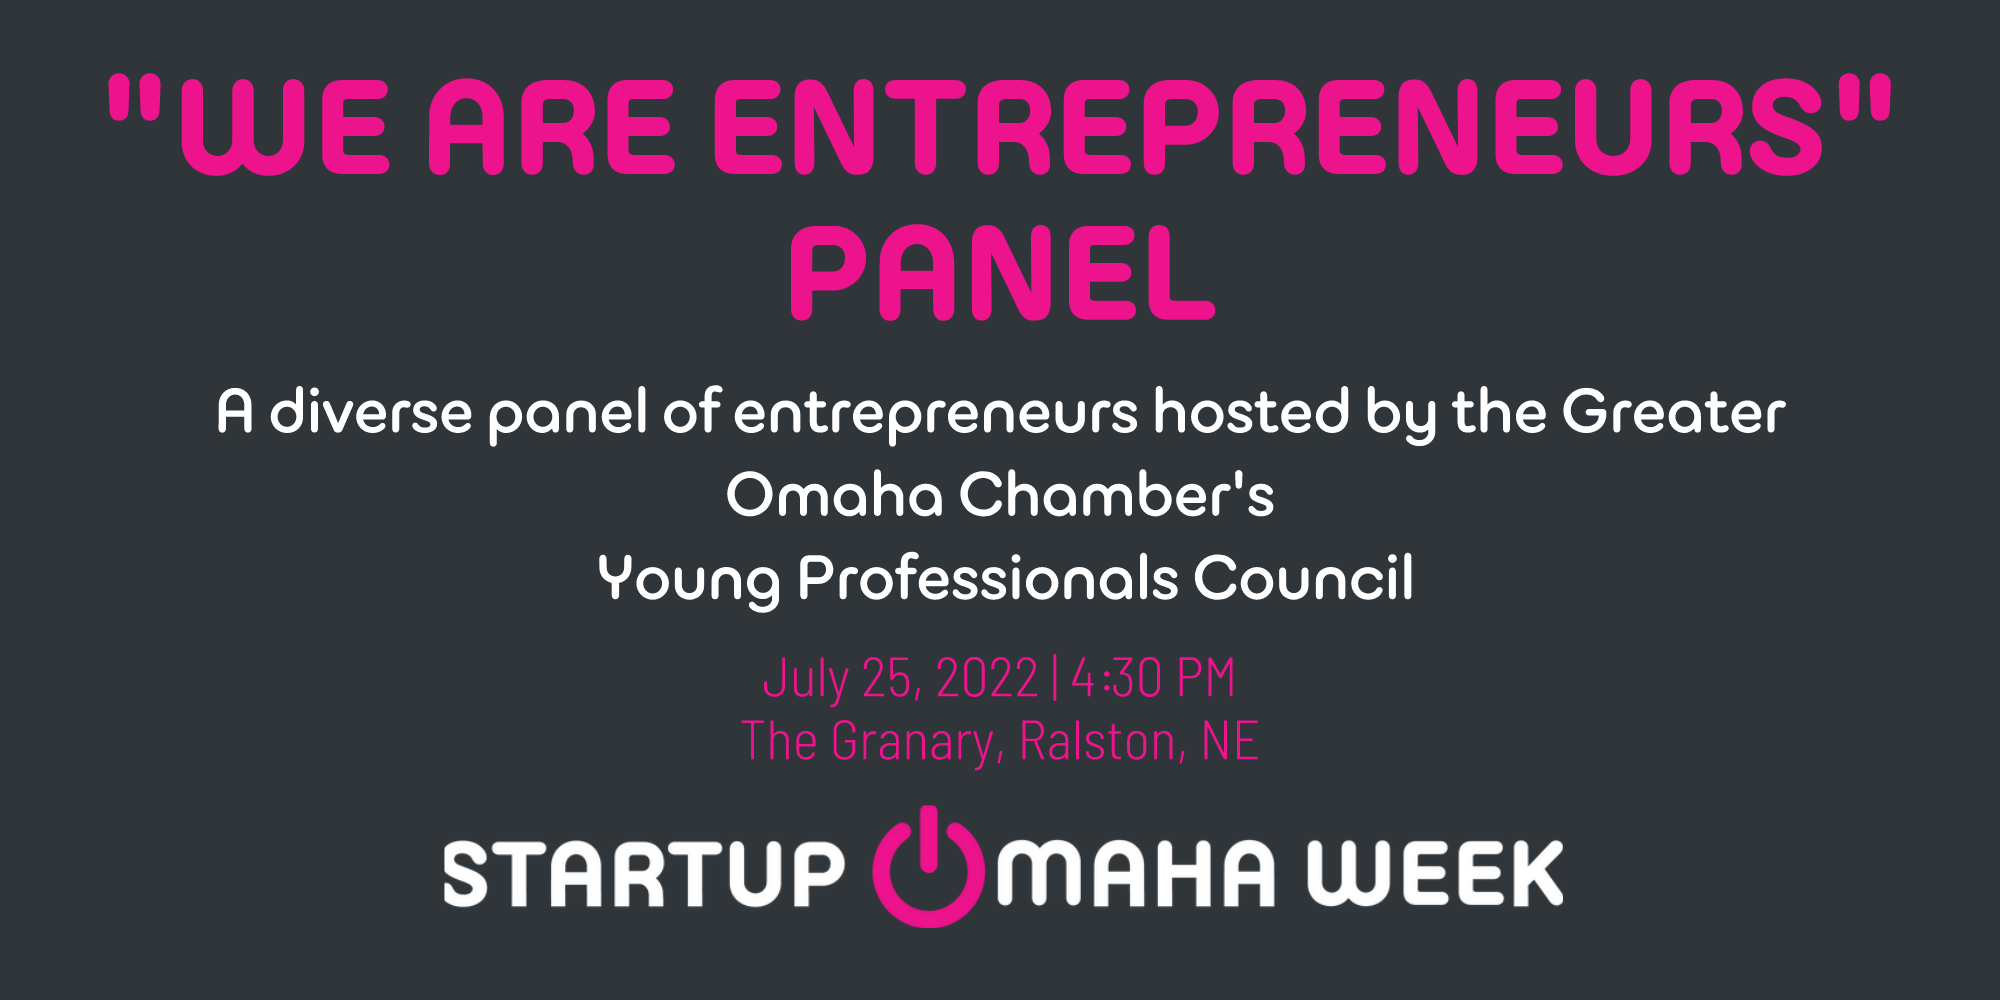 Startup Omaha Week - “We Are Entrepreneurs” Panel promotional image